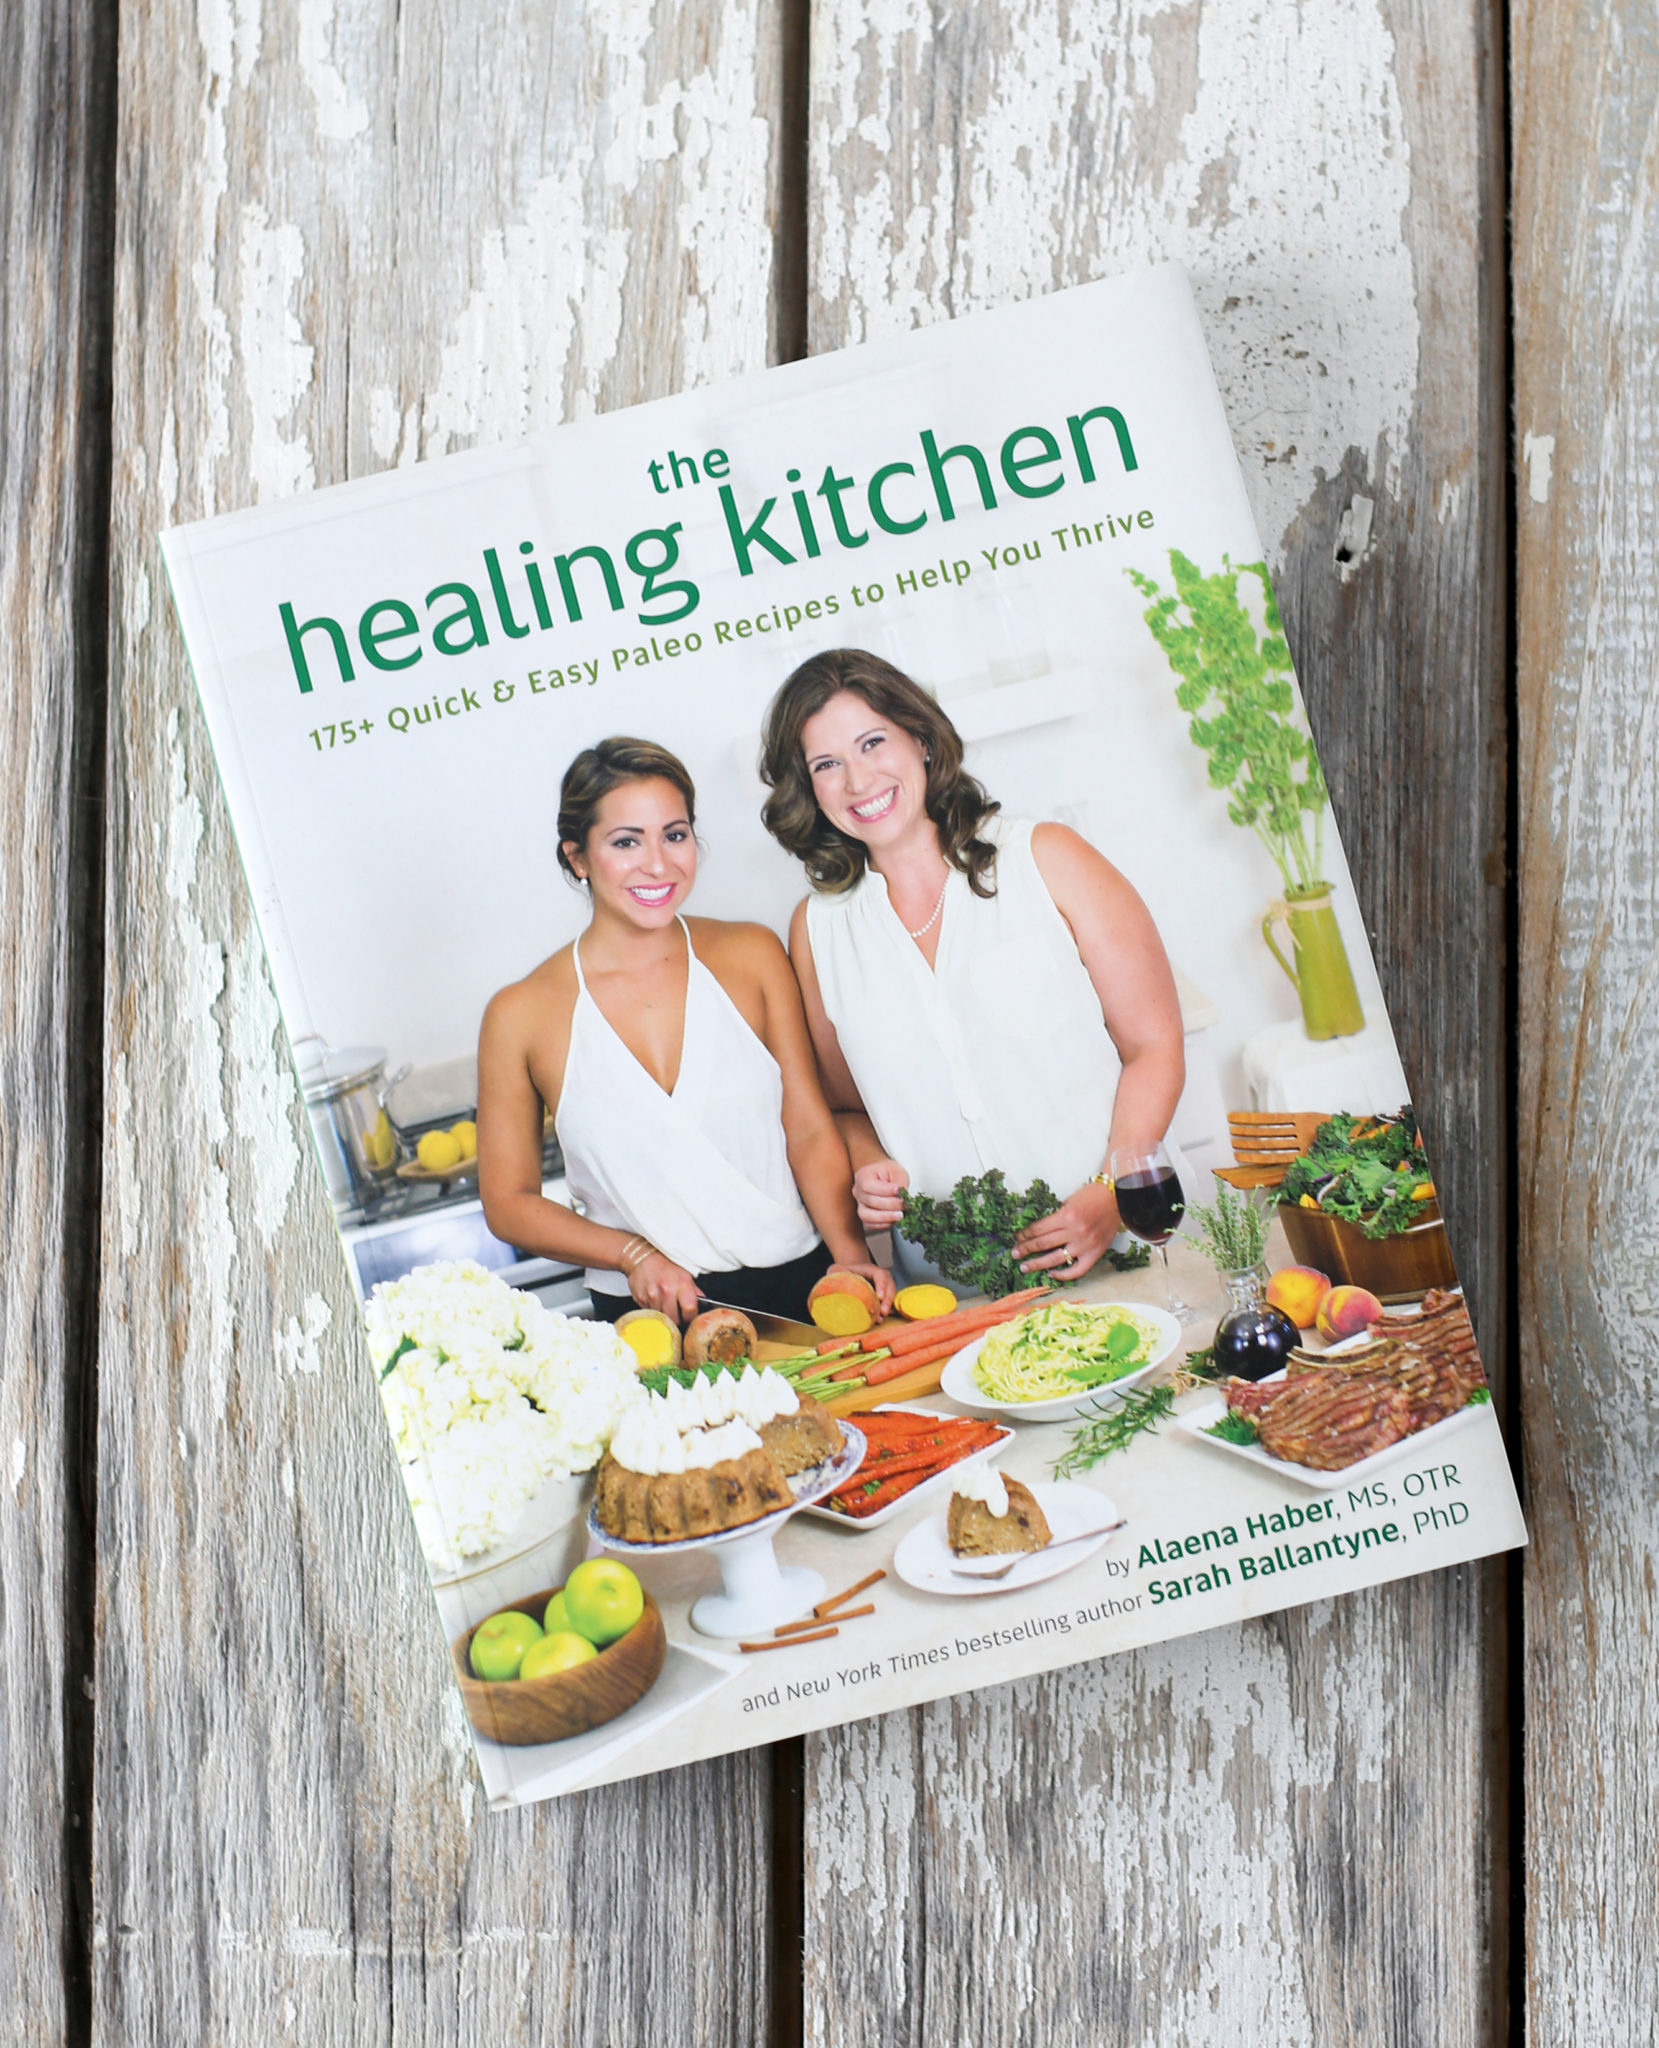 Debra's Healing Kitchen (podcast) - Debra Peek Haynes